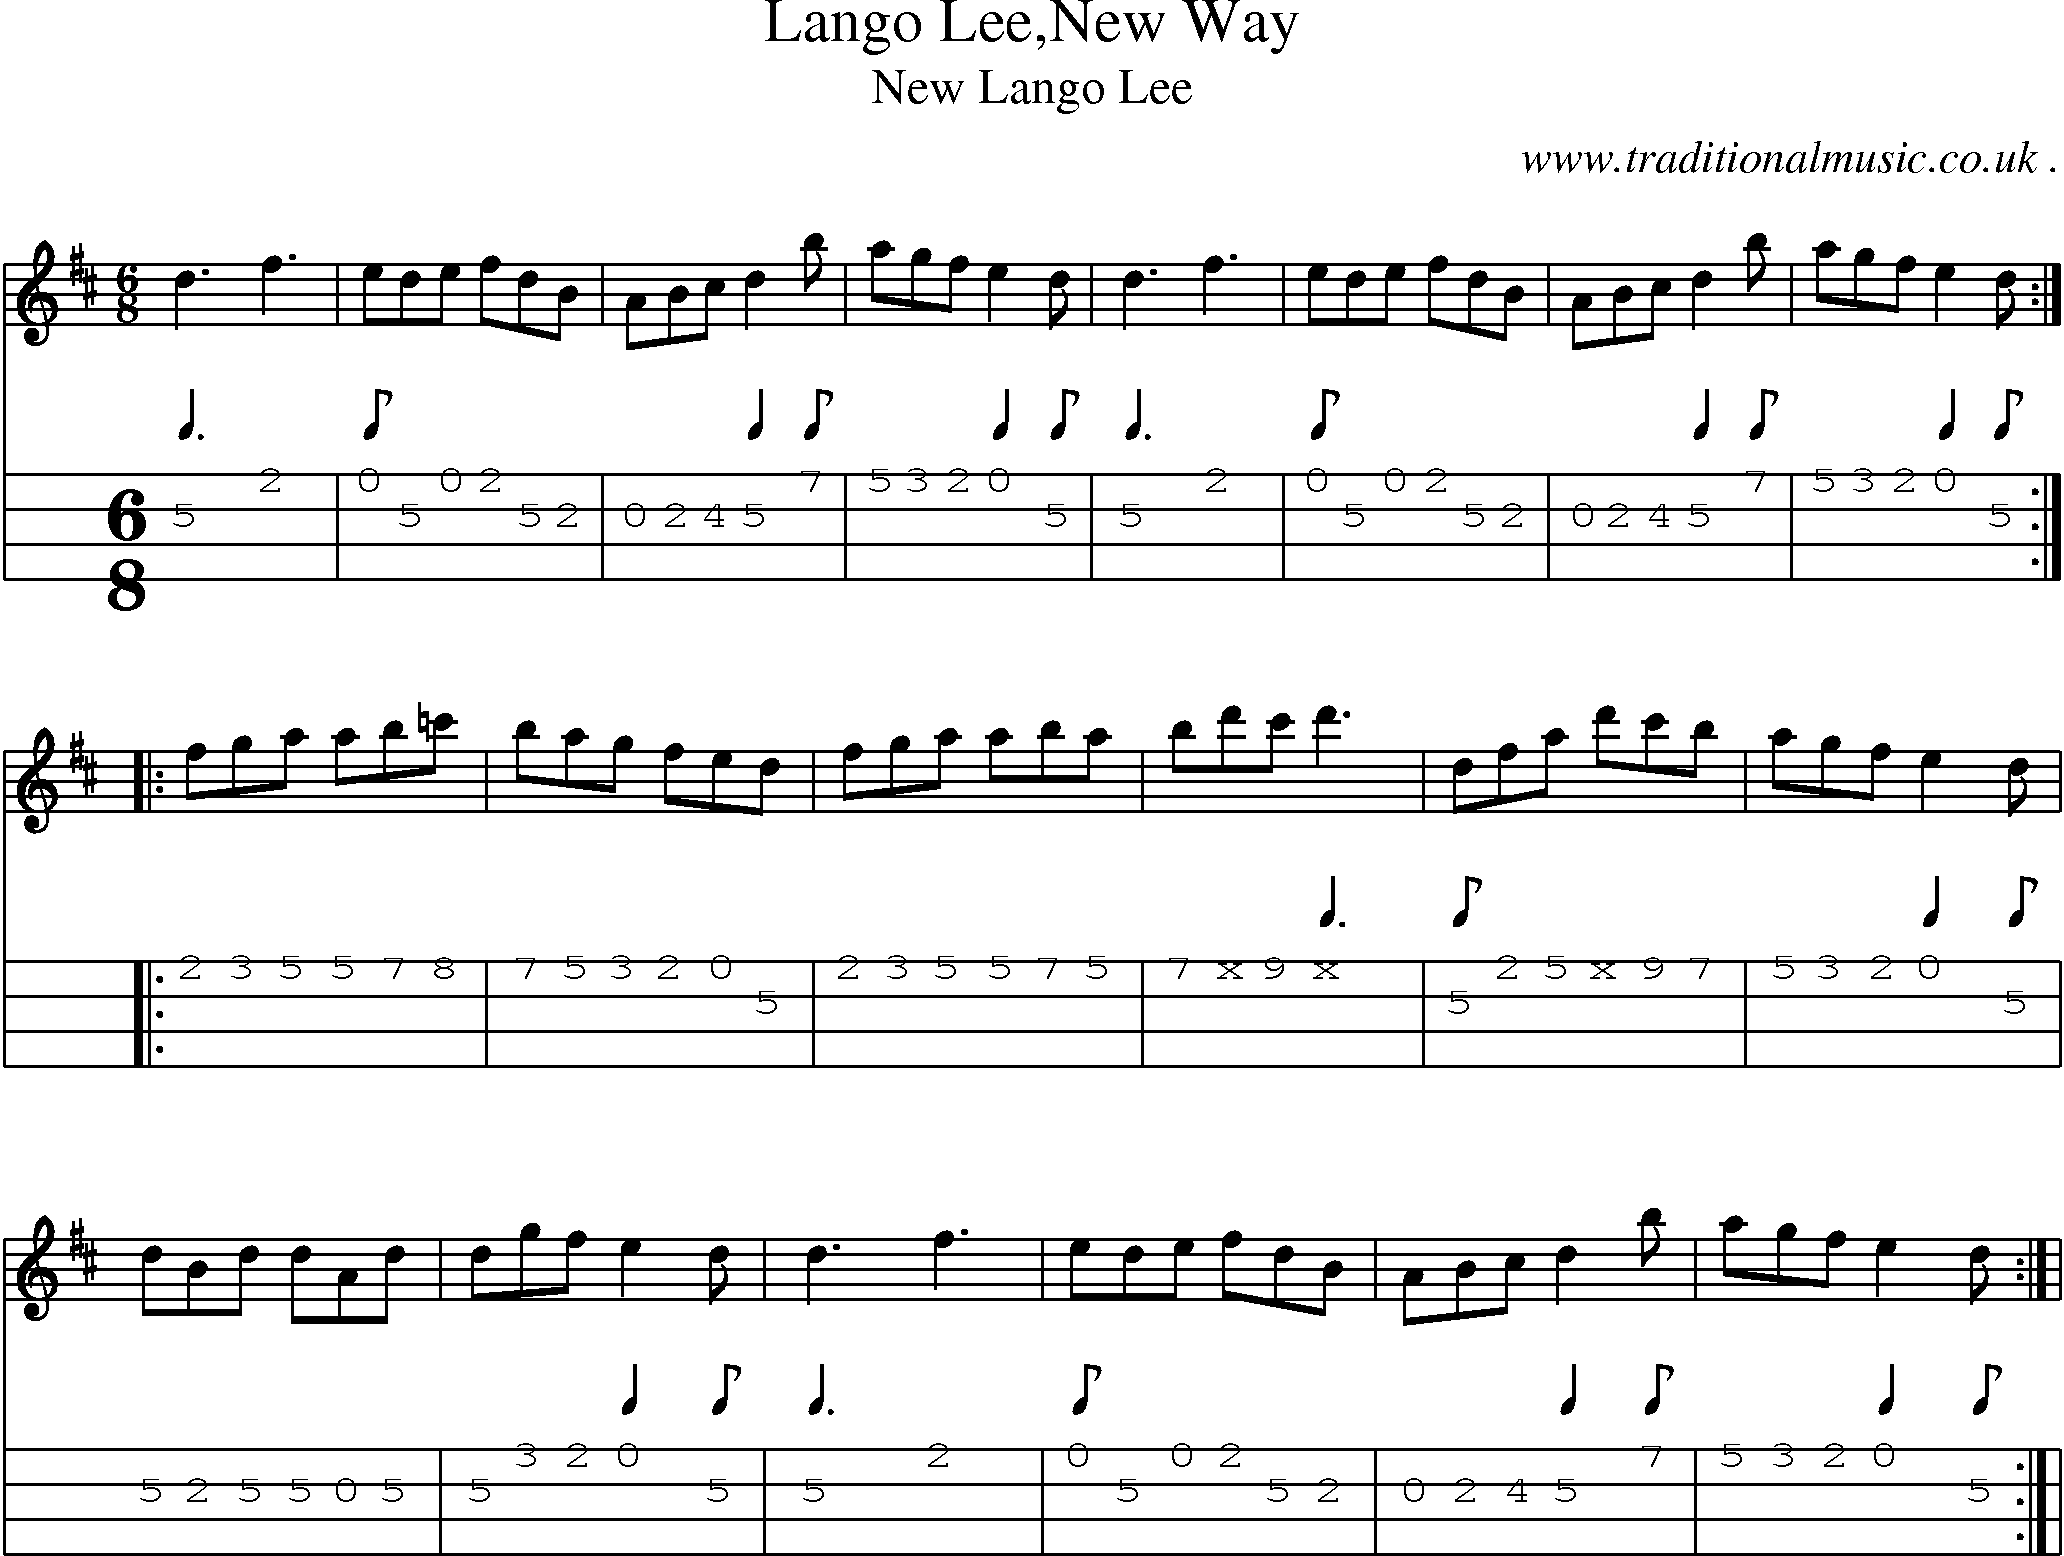 Sheet-Music and Mandolin Tabs for Lango Leenew Way